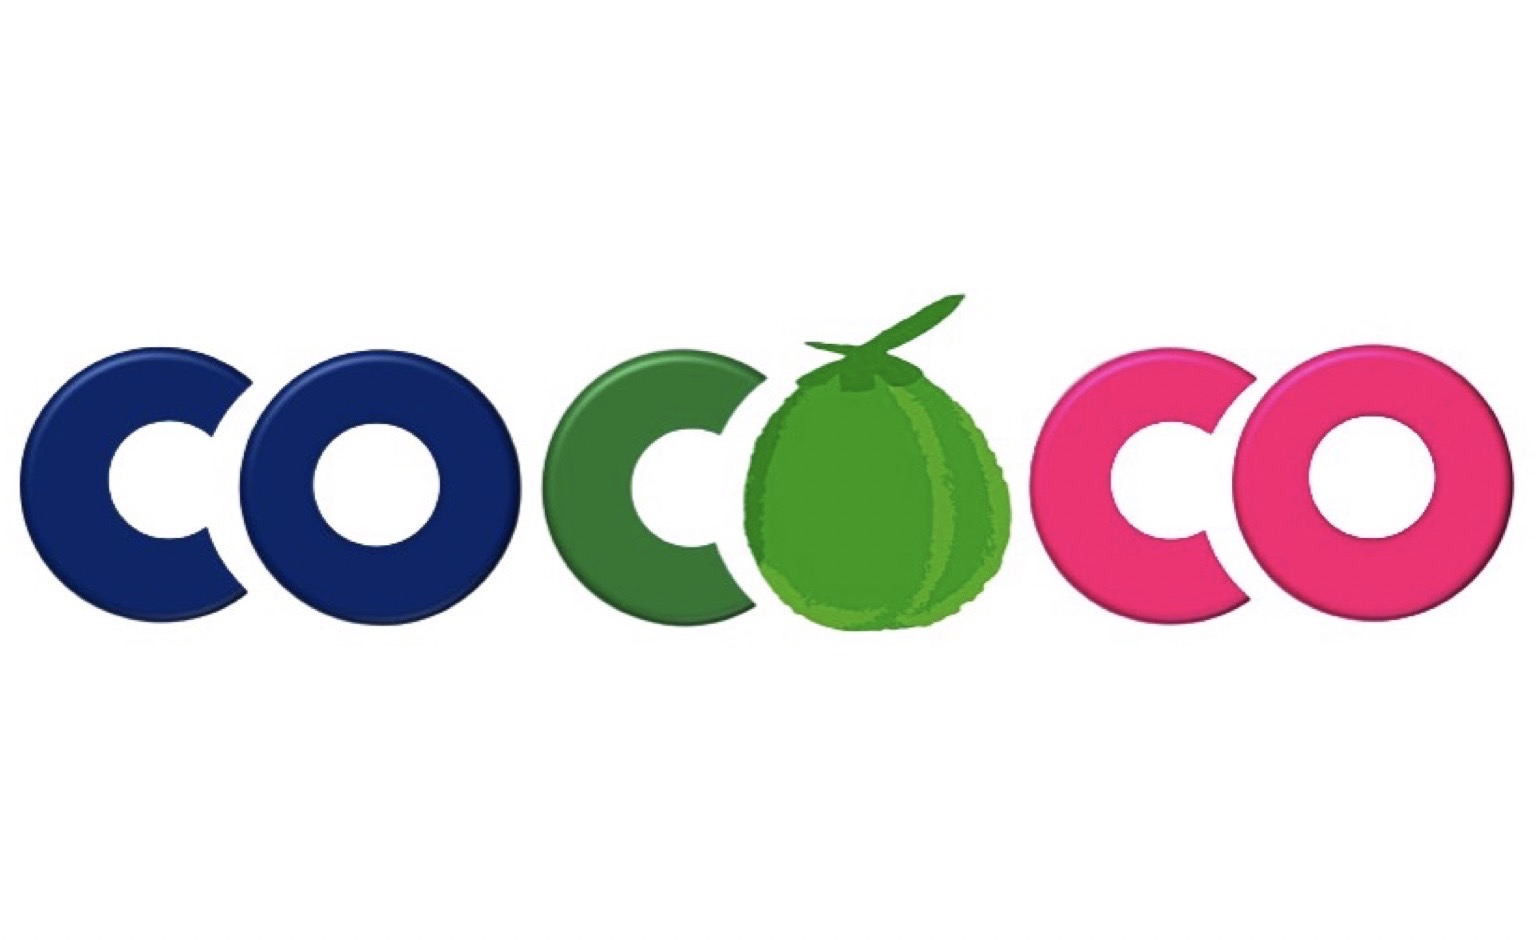 COCOCO เฮ ติดโผดัชนี FTSE Micro cap 